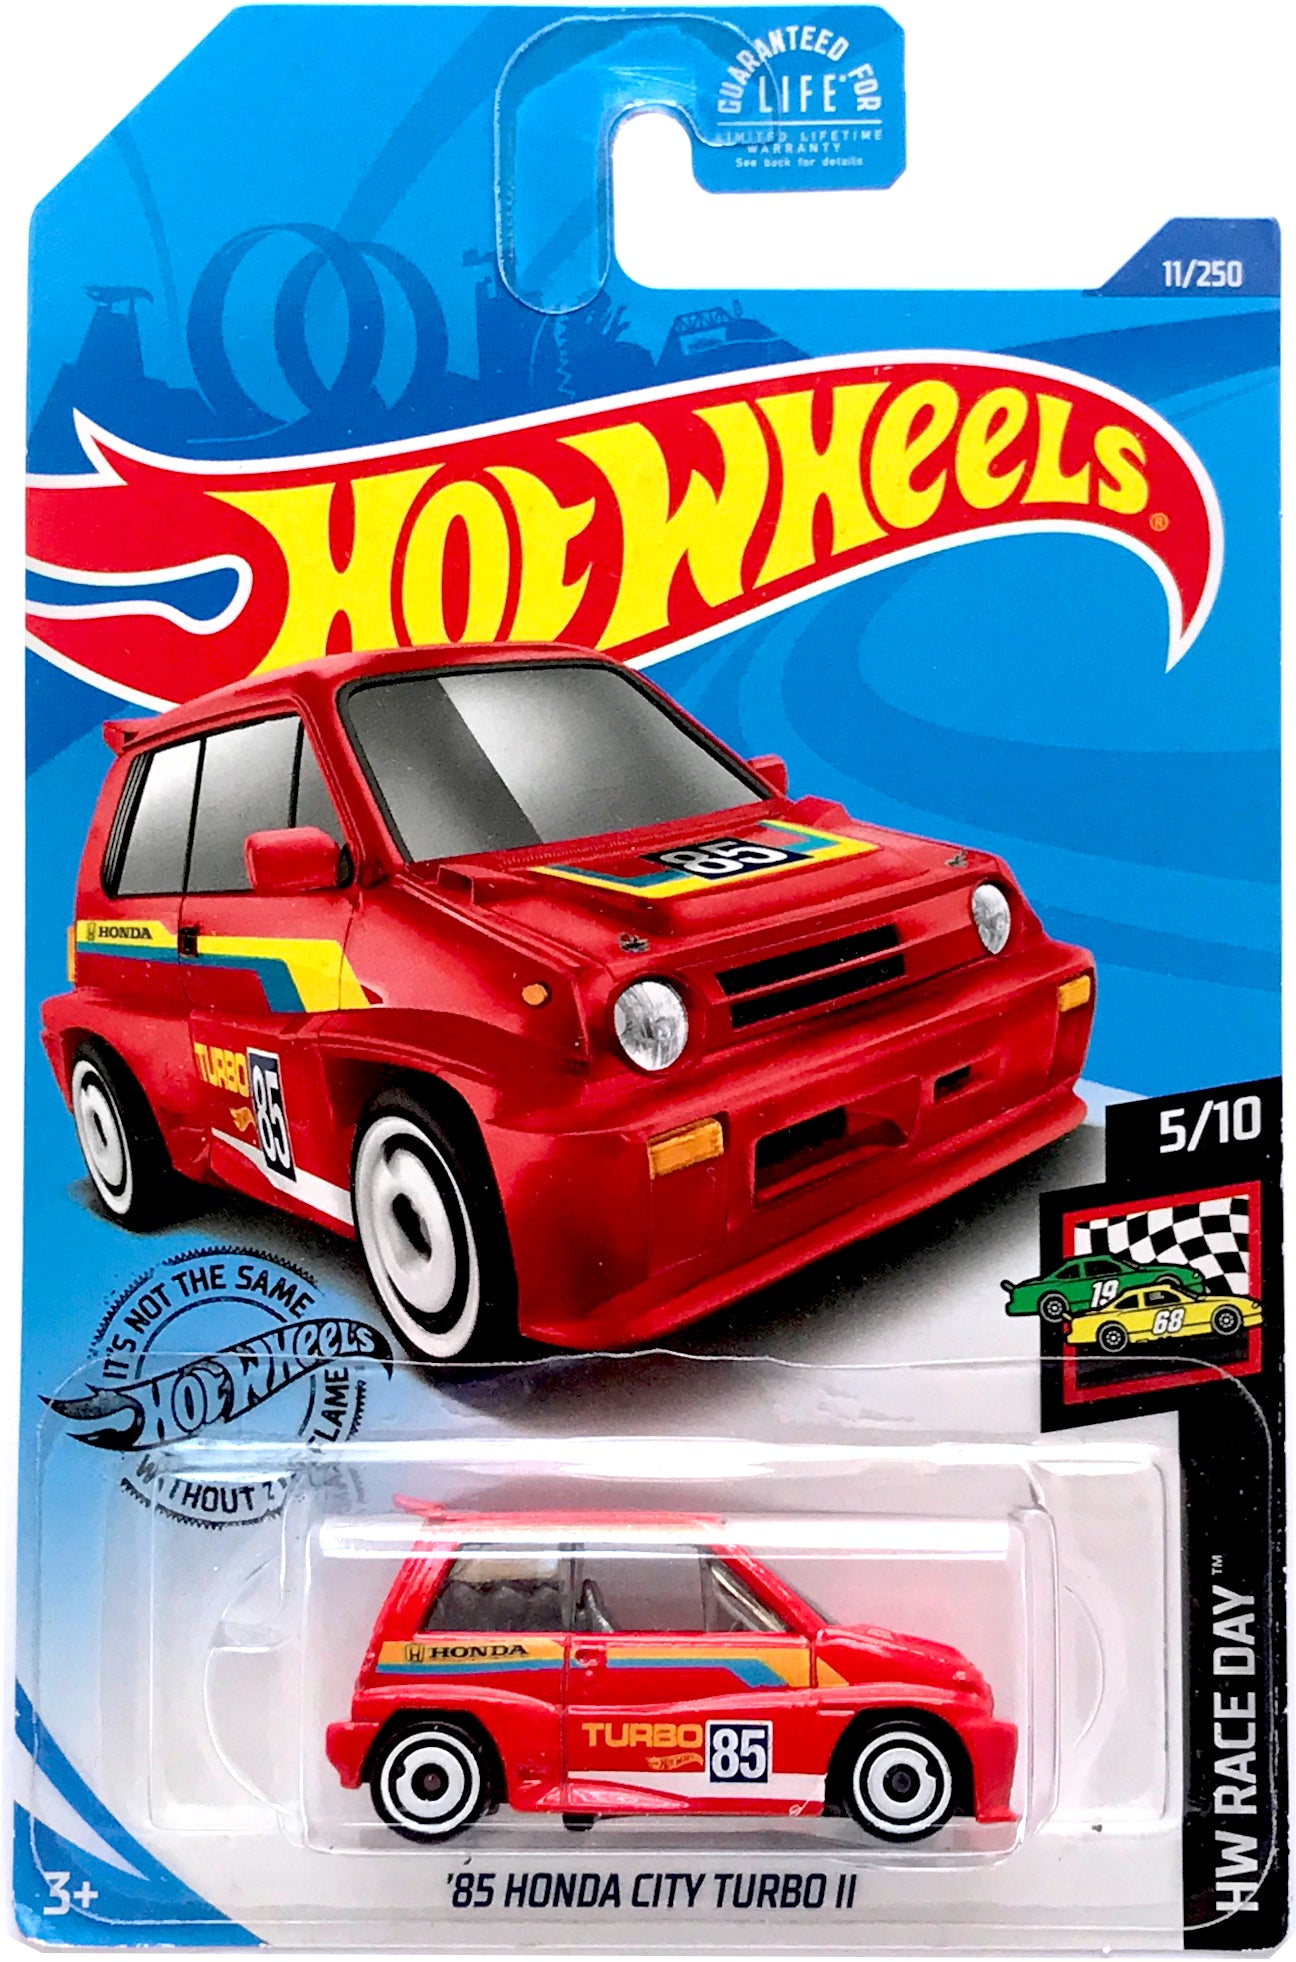 2020 Hot Wheels Mainline #011 - '85 Honda City Turbo II (Red) GHF22